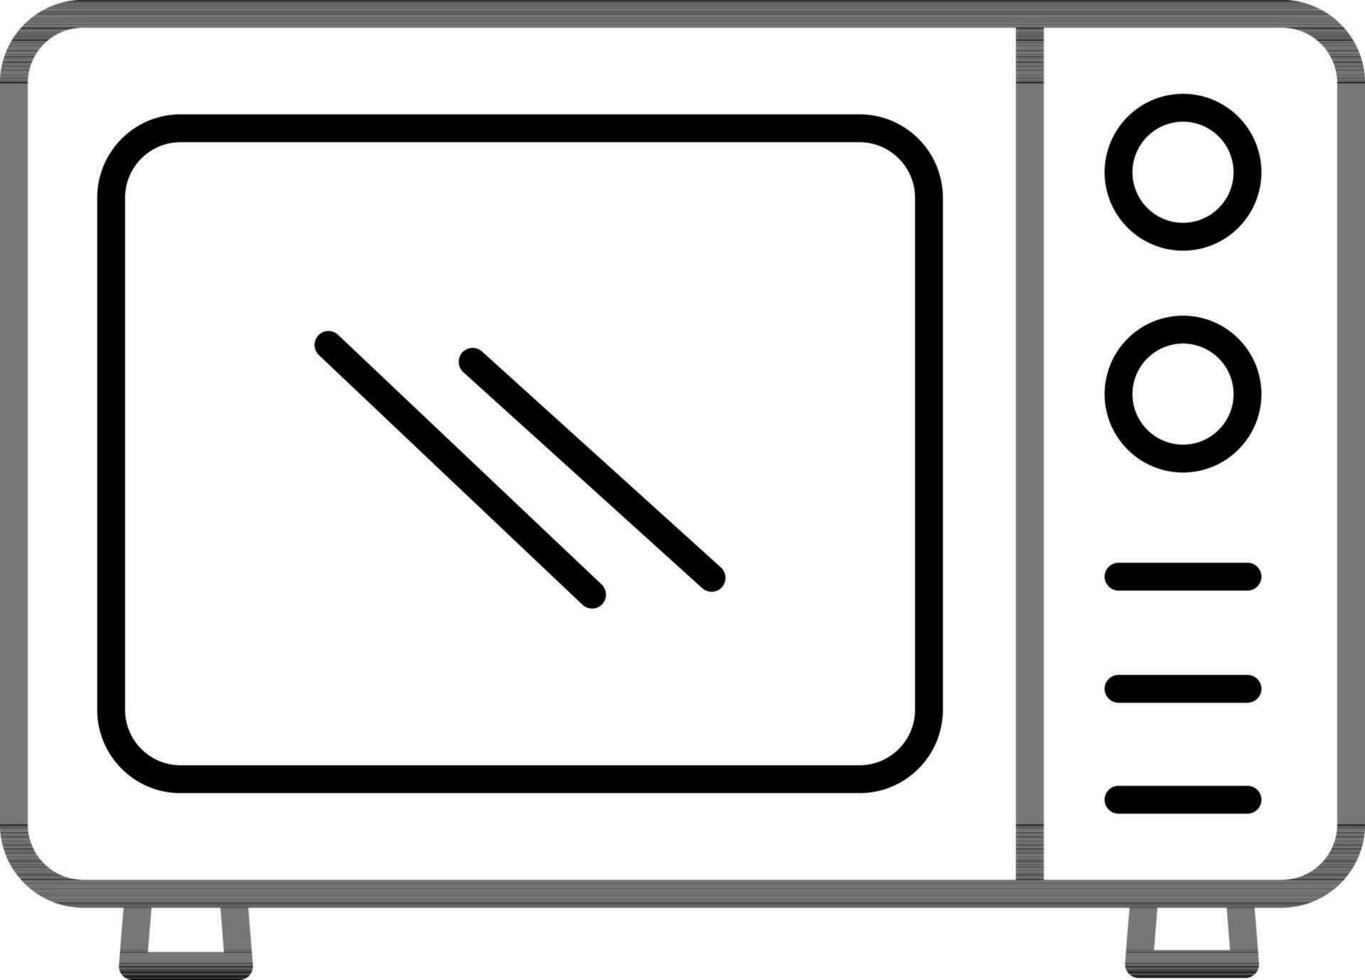 mikrovågsugn ikon eller symbol i svart linje konst. vektor